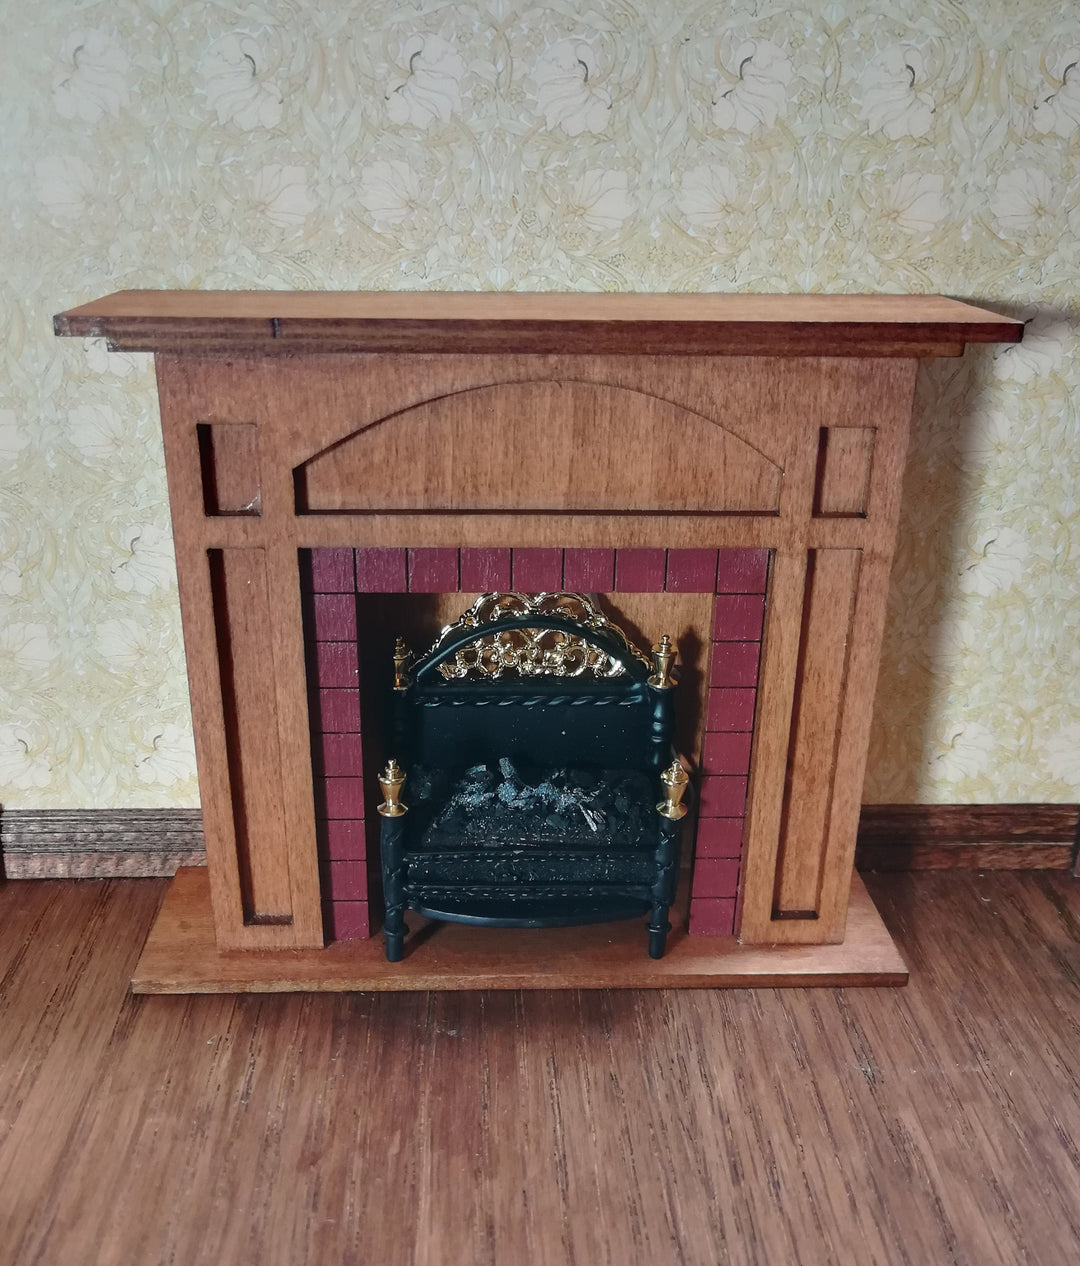 Dollhouse Lit Fire Basket Fireplace Insert Coals 12v with Plug 1:12 Scale Miniature